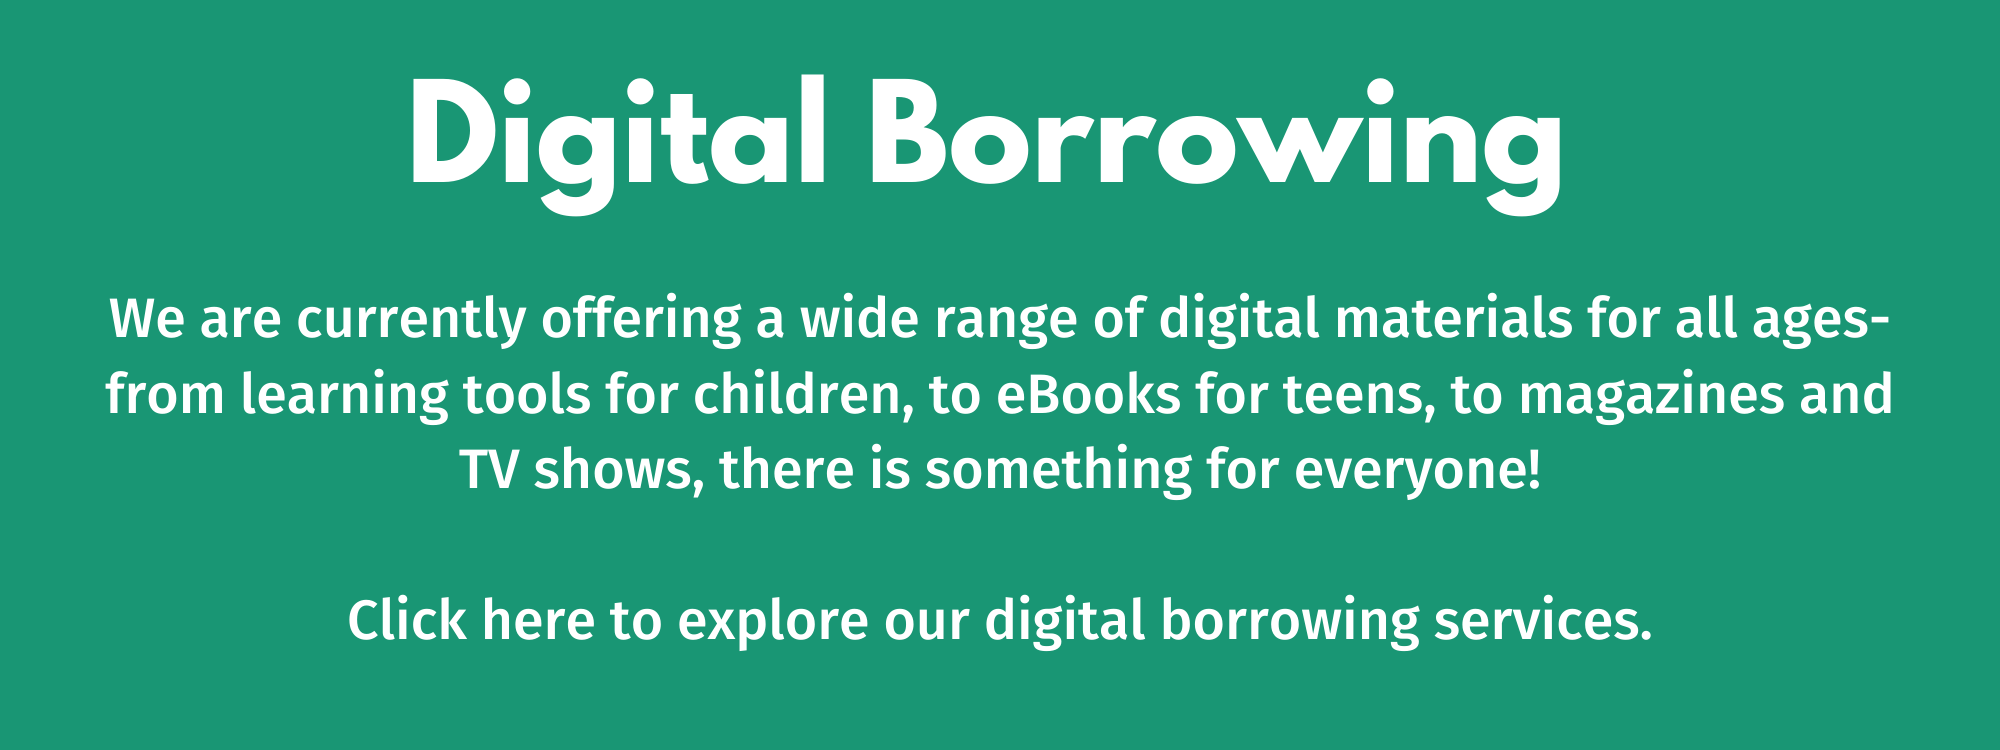 Digital Borrowing 